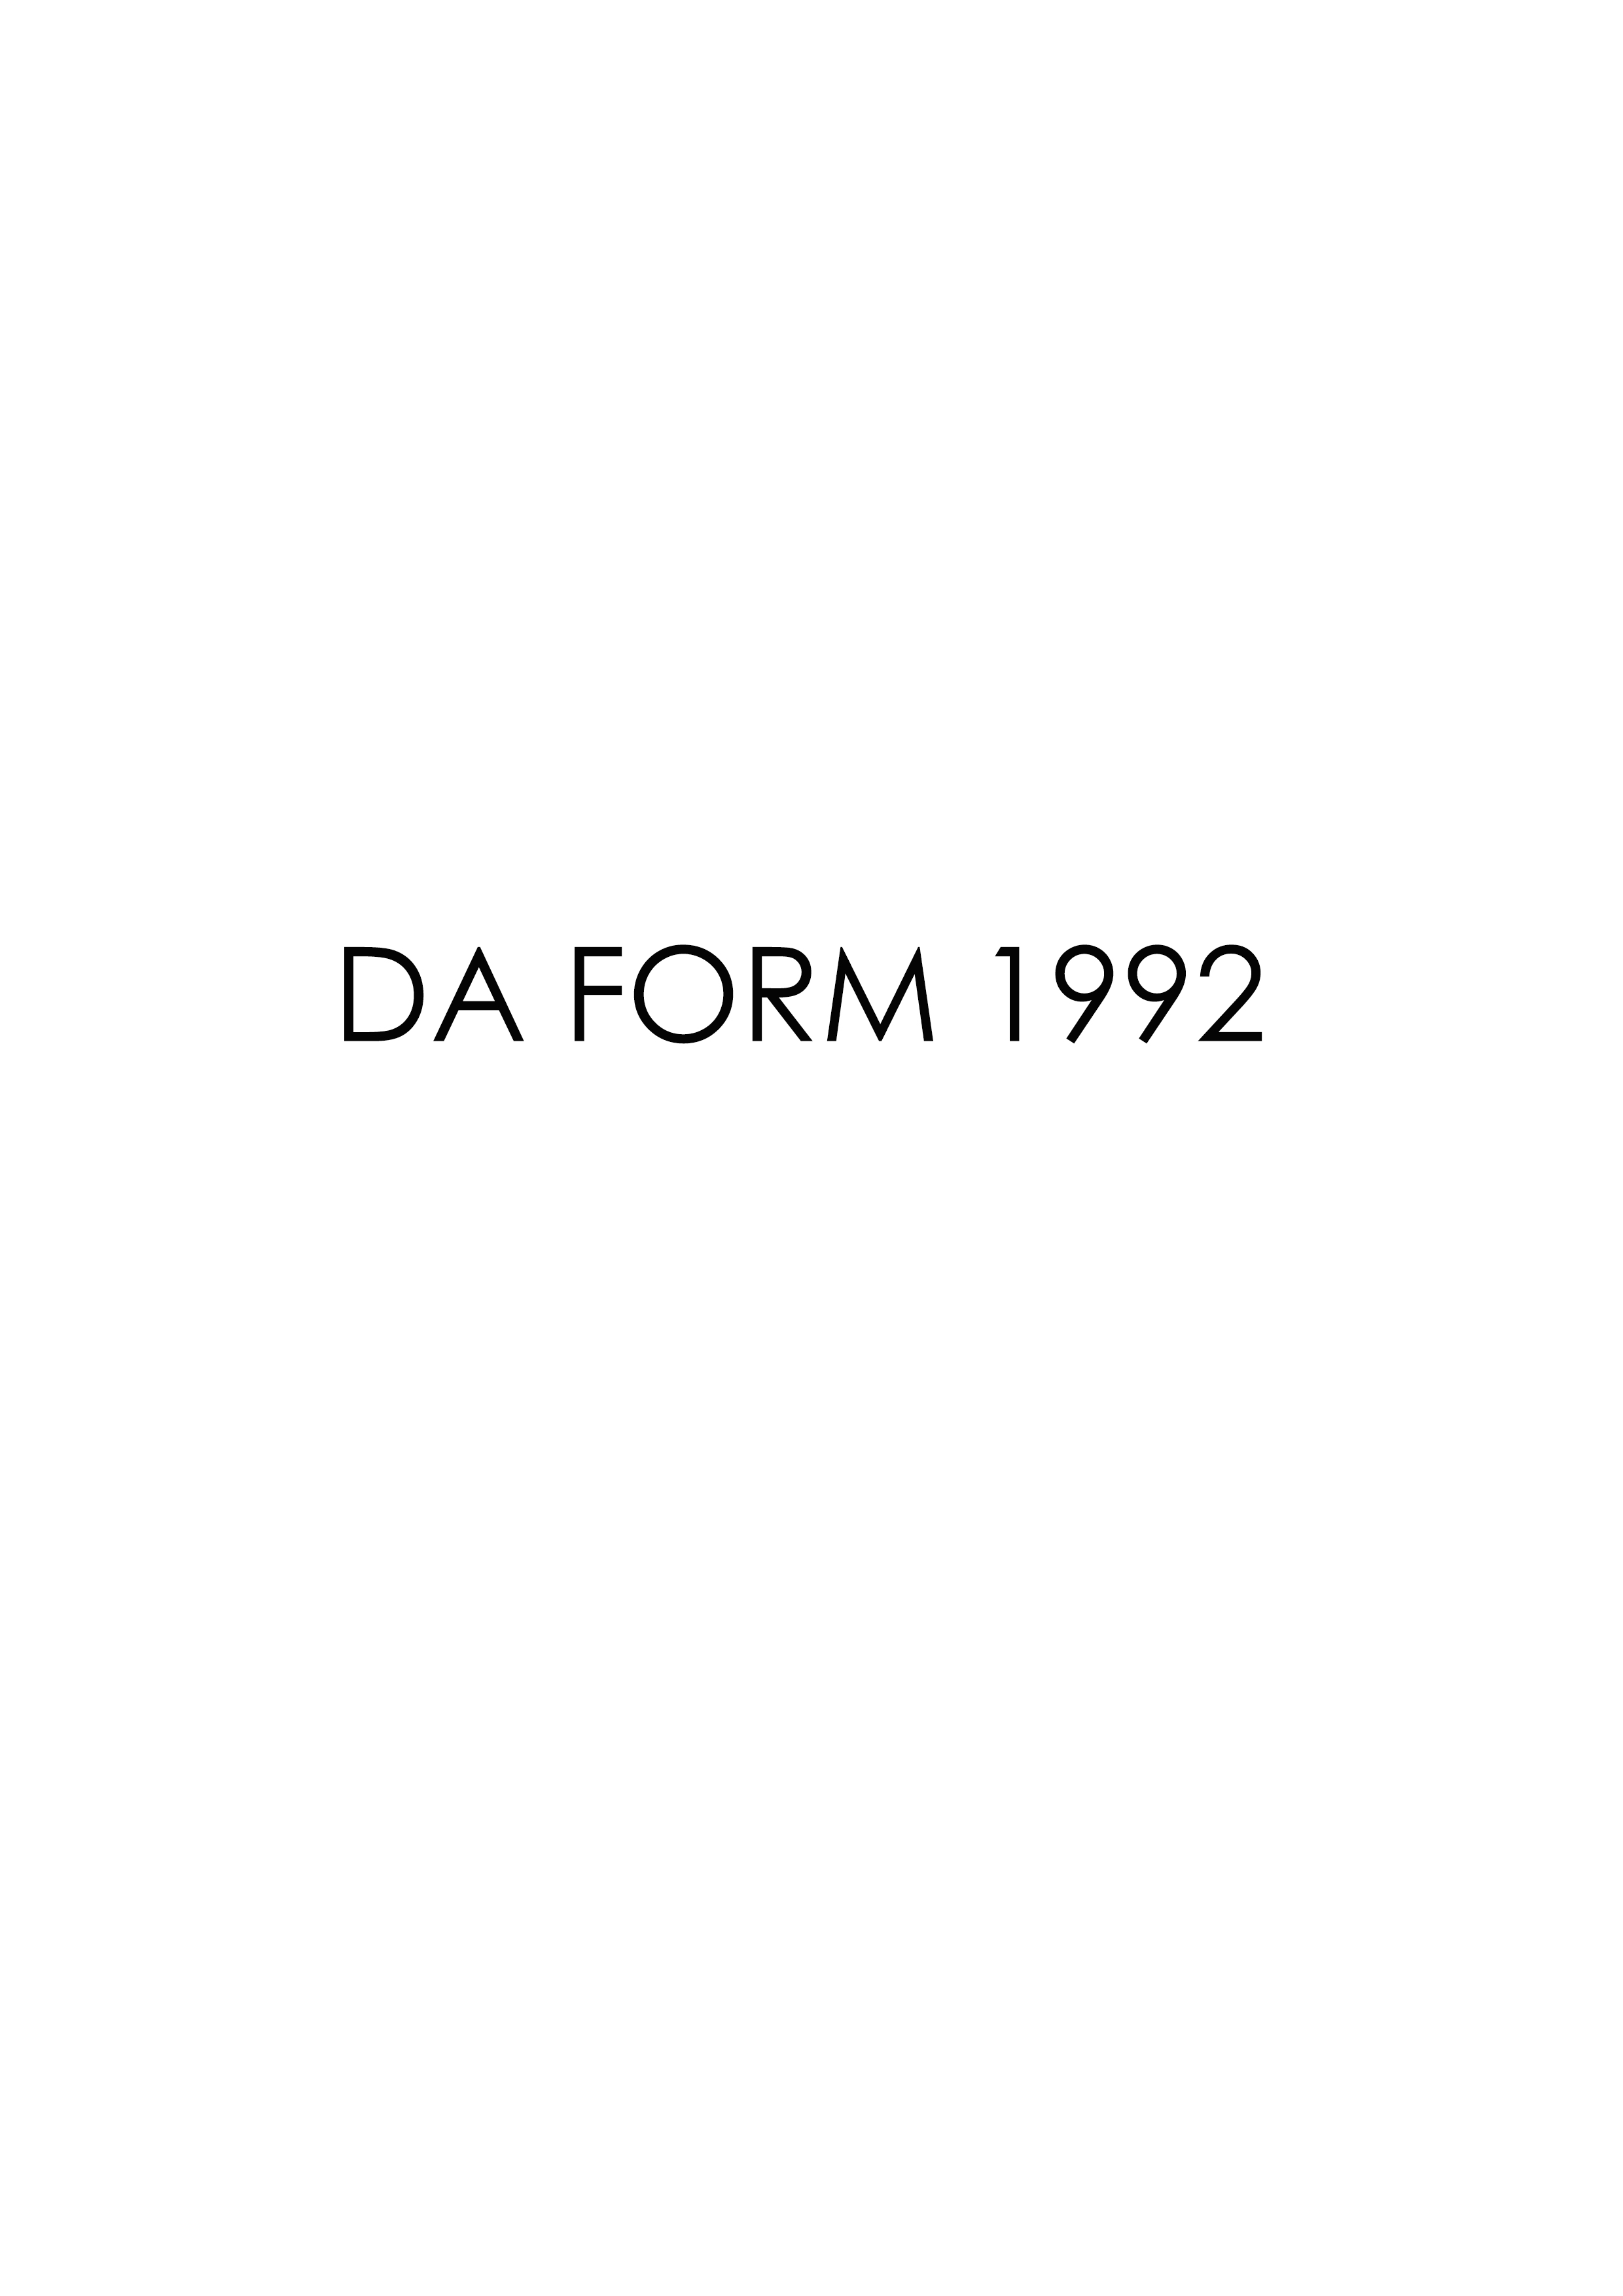 Download da 1992 Form